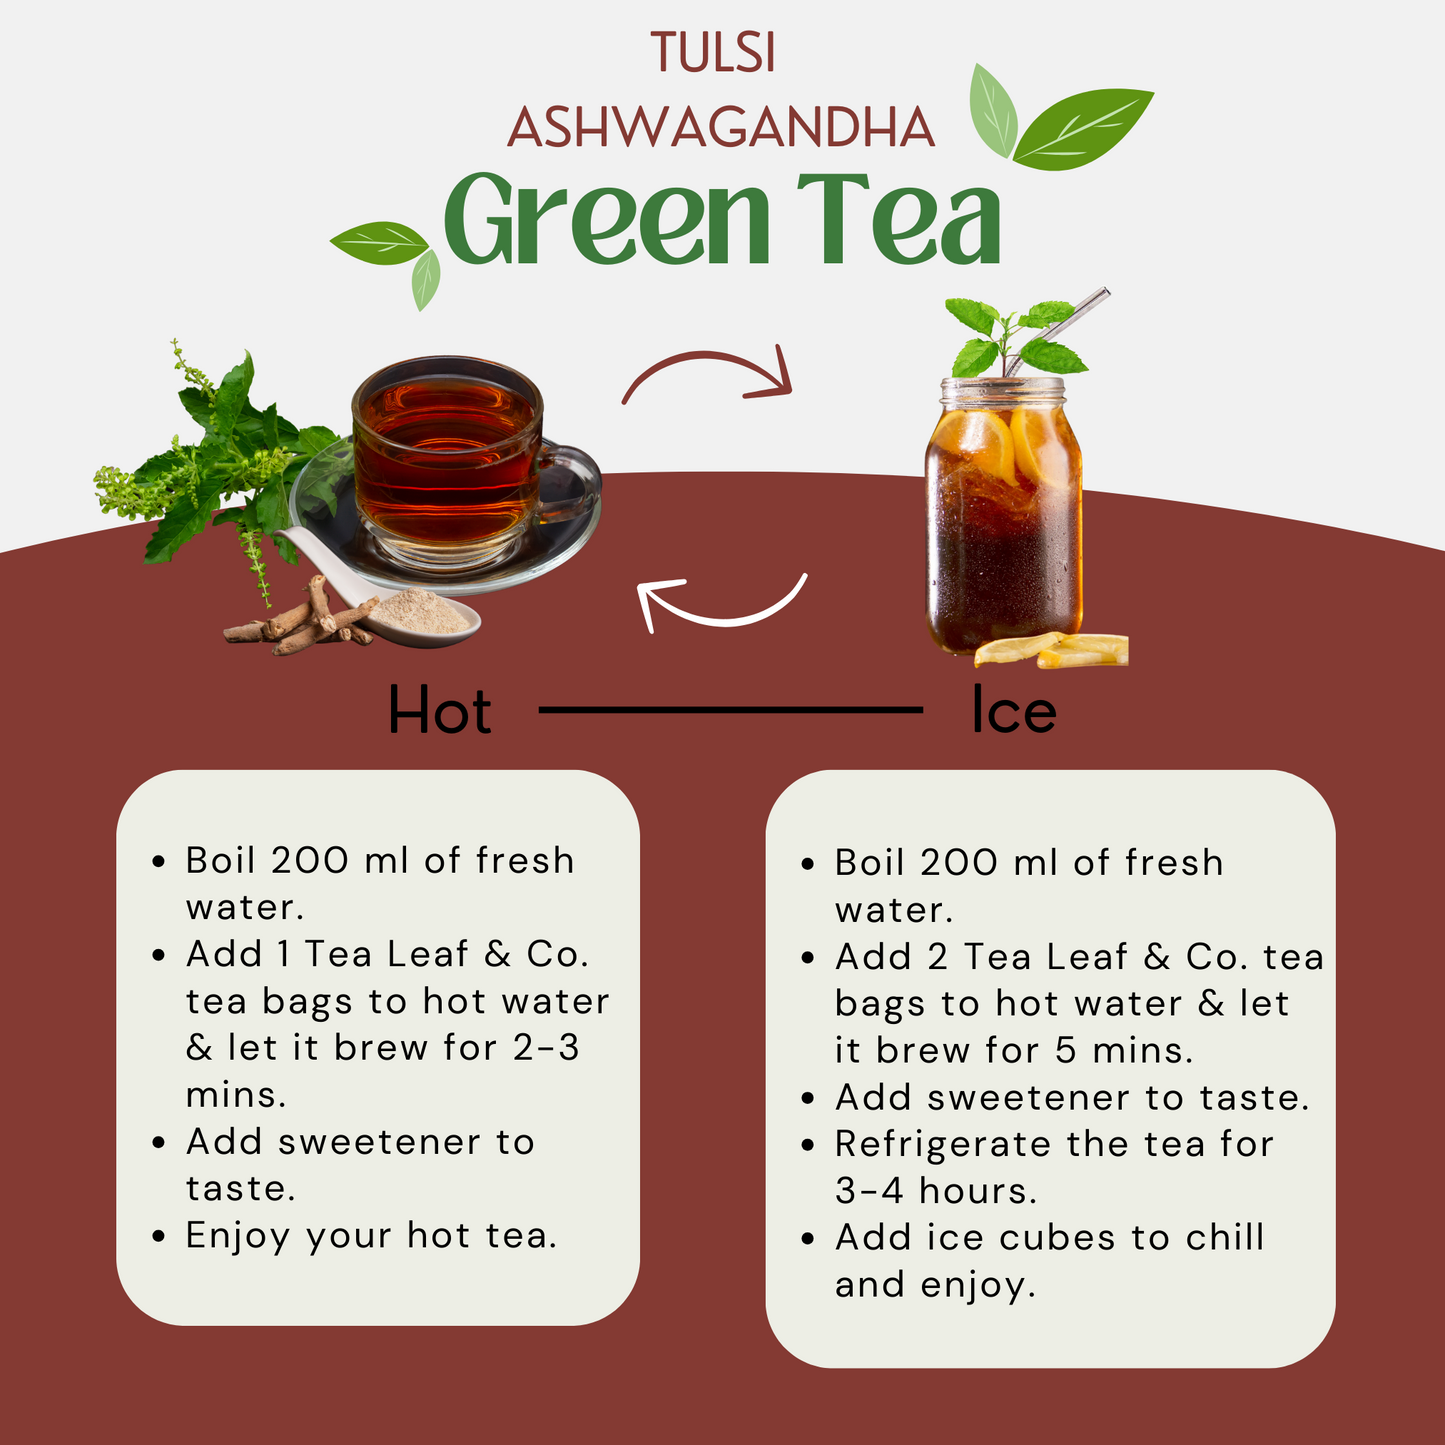 Tulsi Ashwagandha Green Tea (Pack of 2) - 30 Pyramid Tea bags